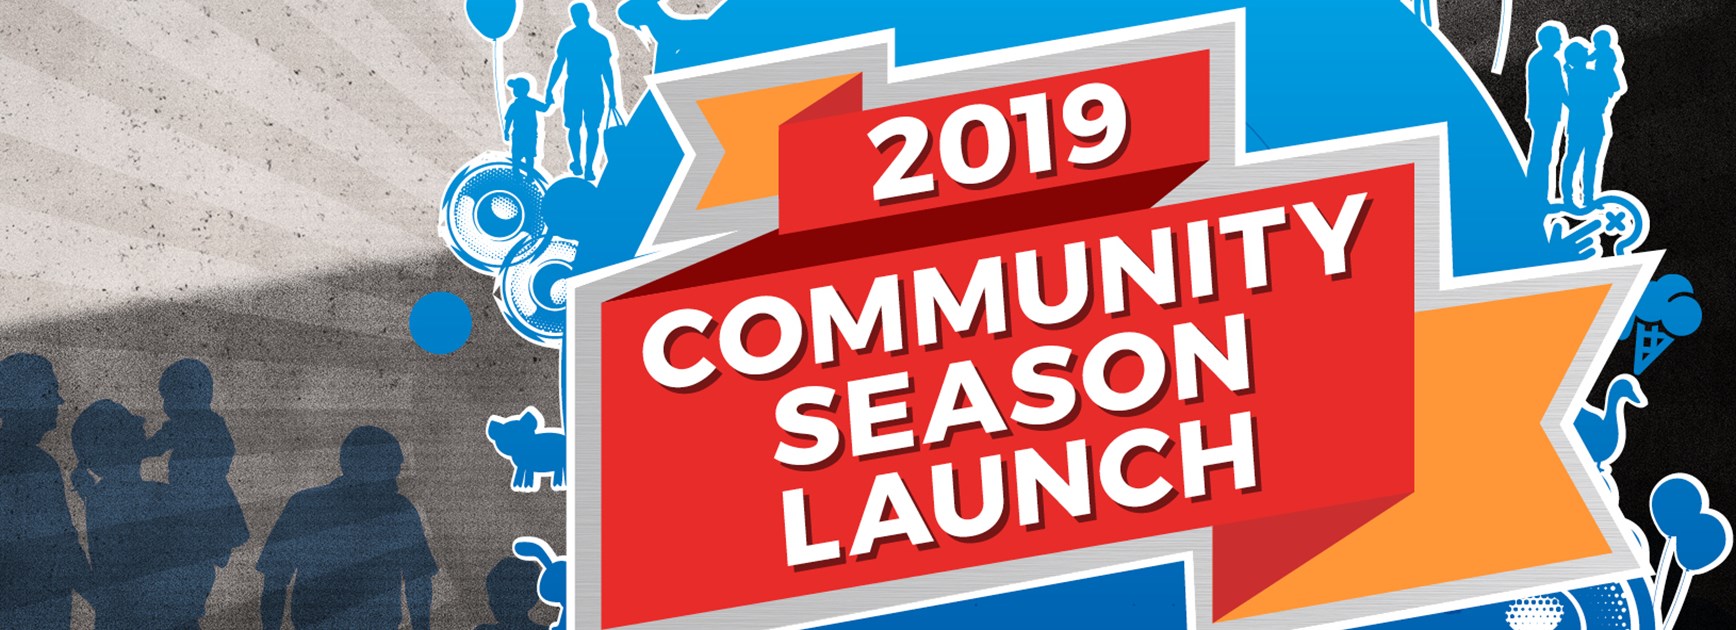 2019 Community Season Launch